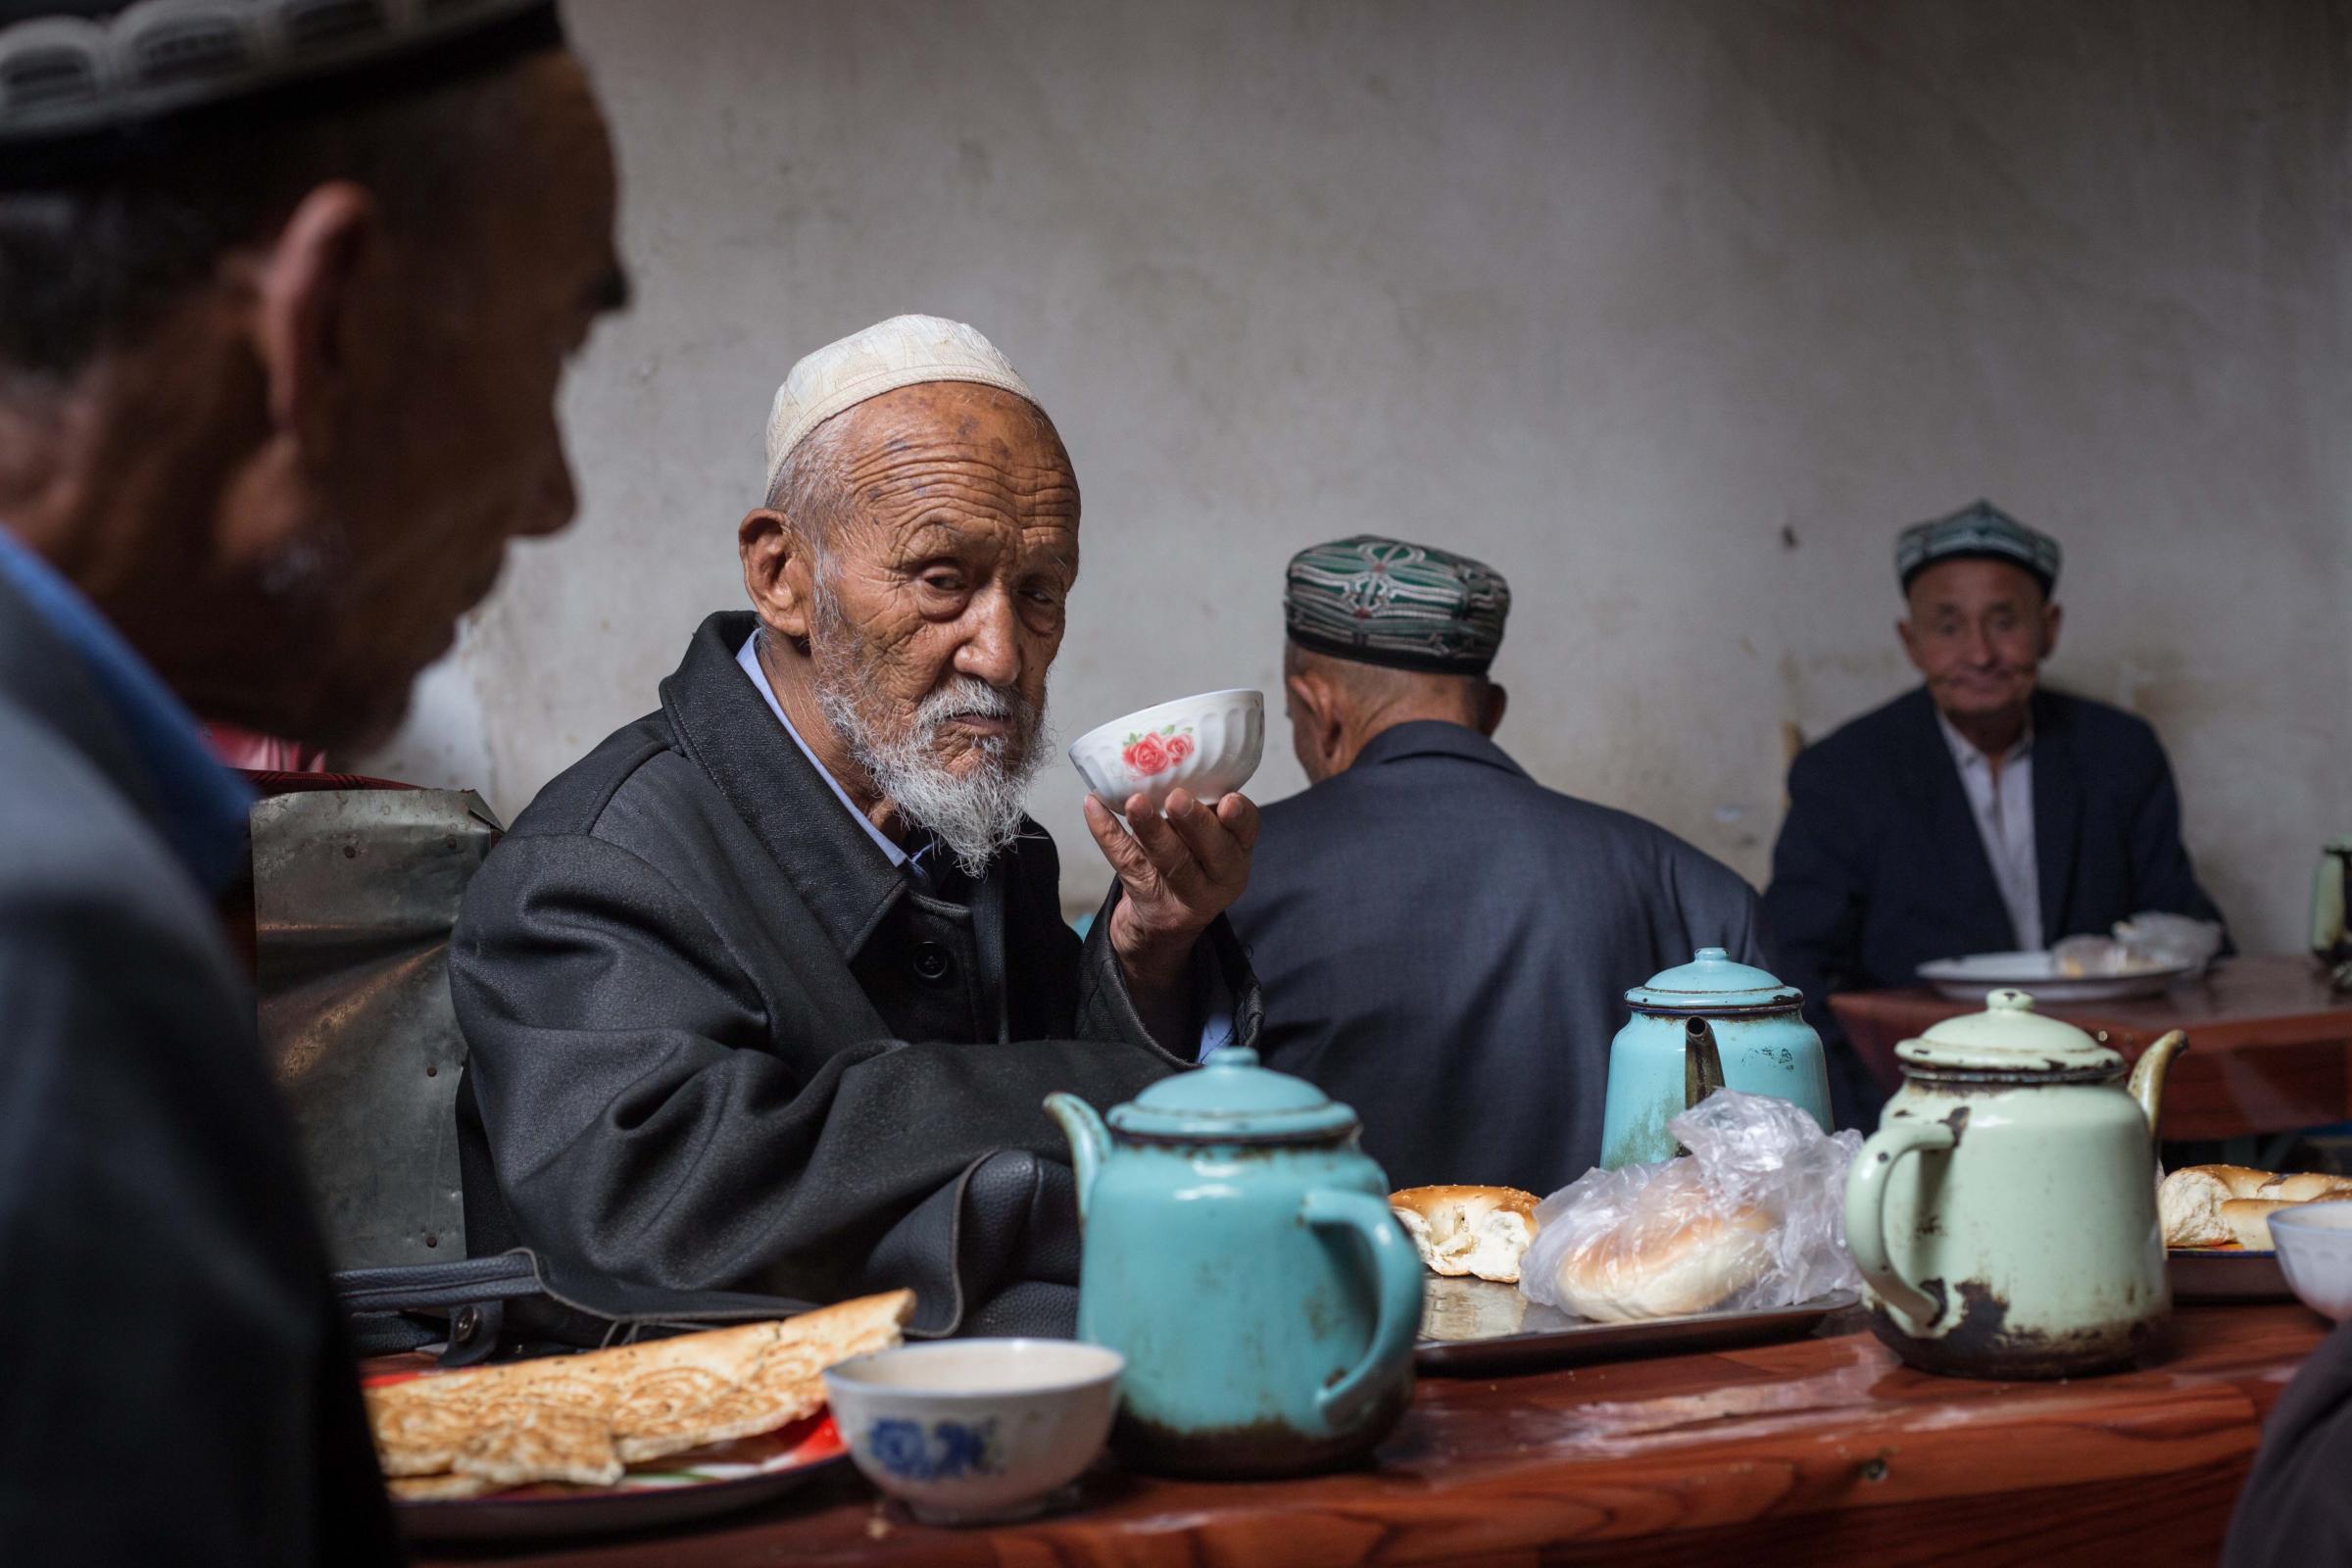 Daily Life in northwestern China's Xinjiang Uighur Autonomous Region